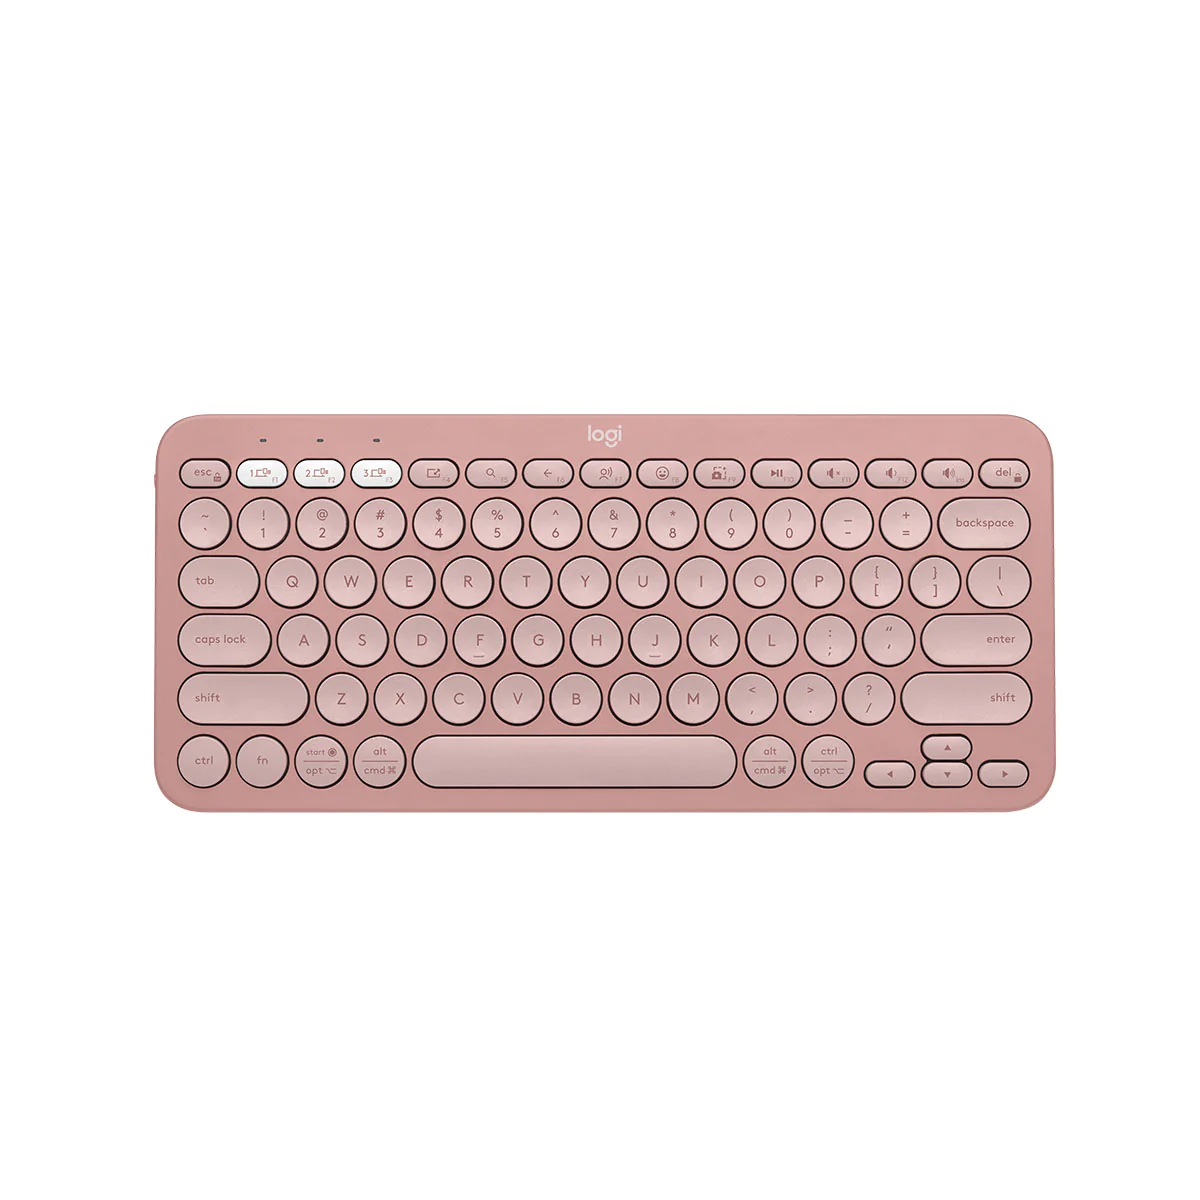 Logitech Pebble Keys 2 K380s English Cordless Mini-Keyboard - Bluetooth (Multi-Device) (Rose) #920-011755